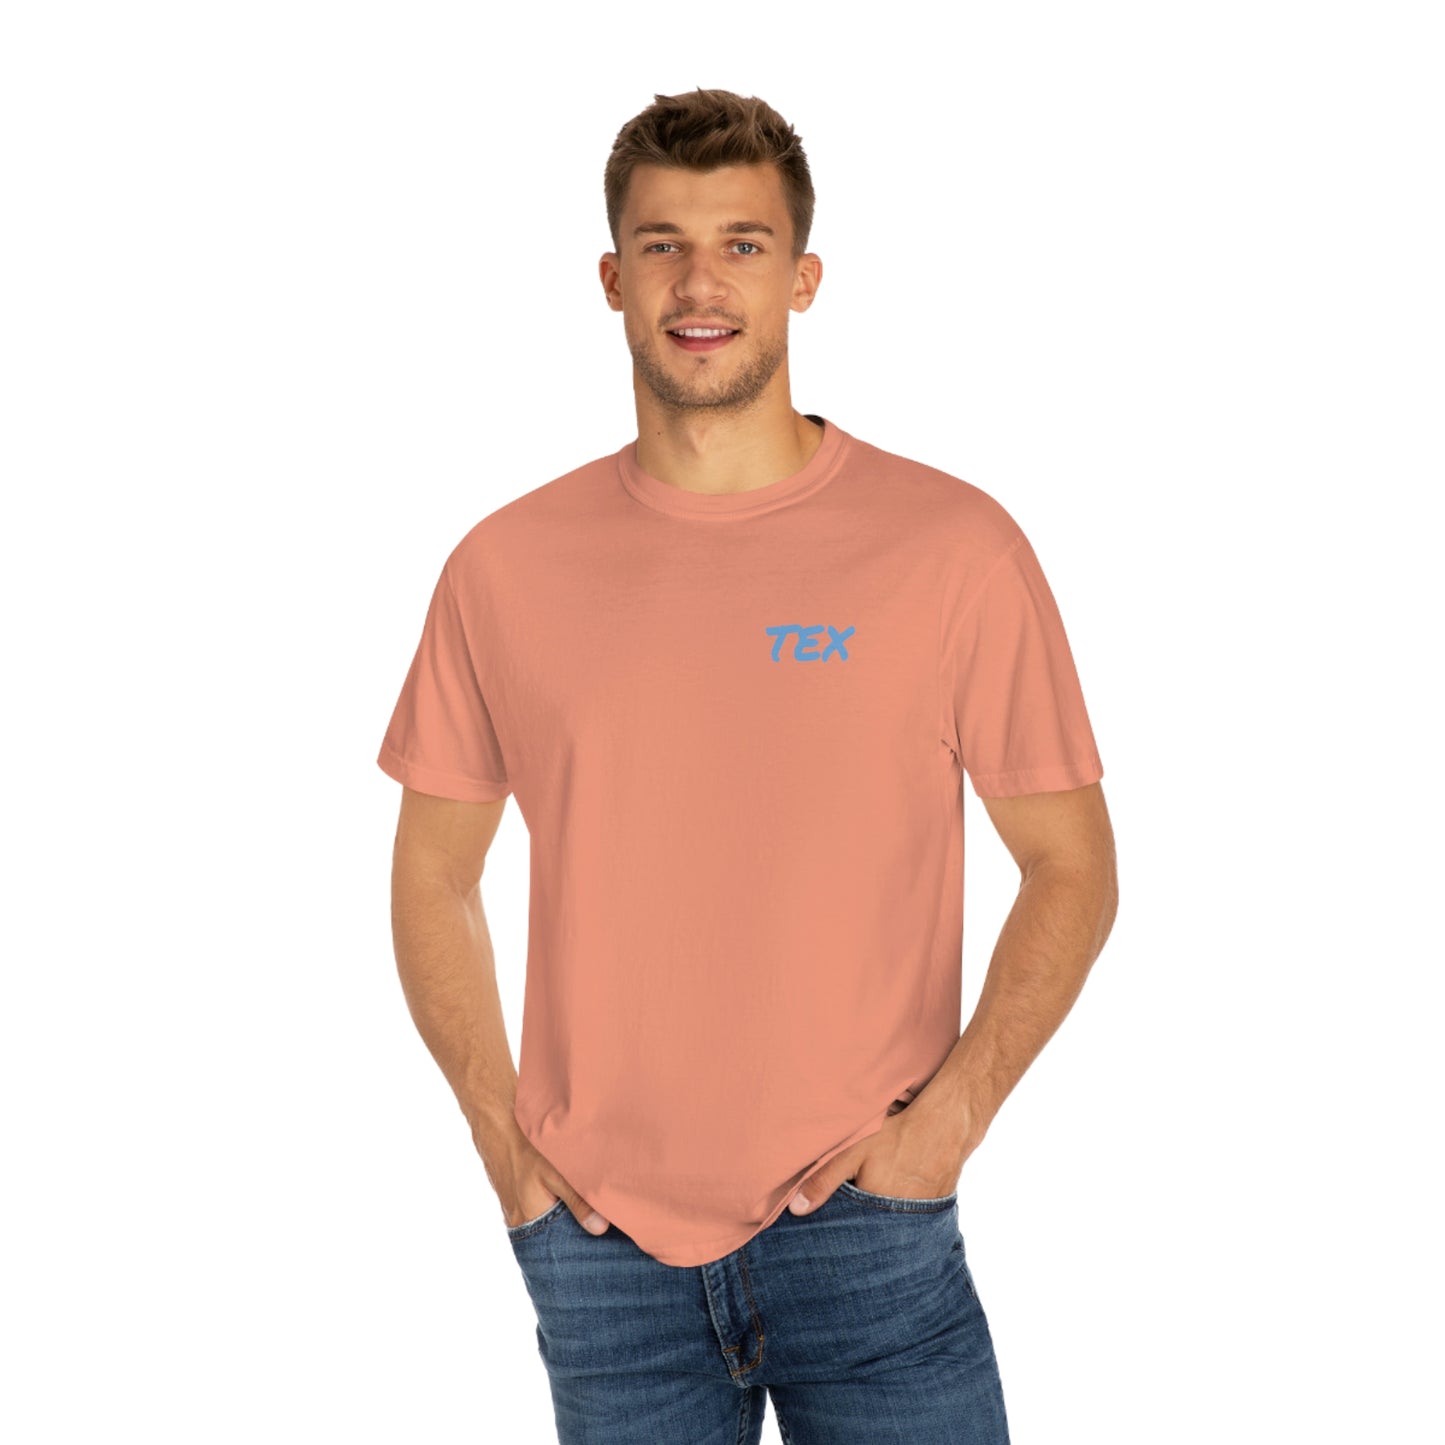 Official Swilson "TEX" T-Shirt (Comfort Colors)